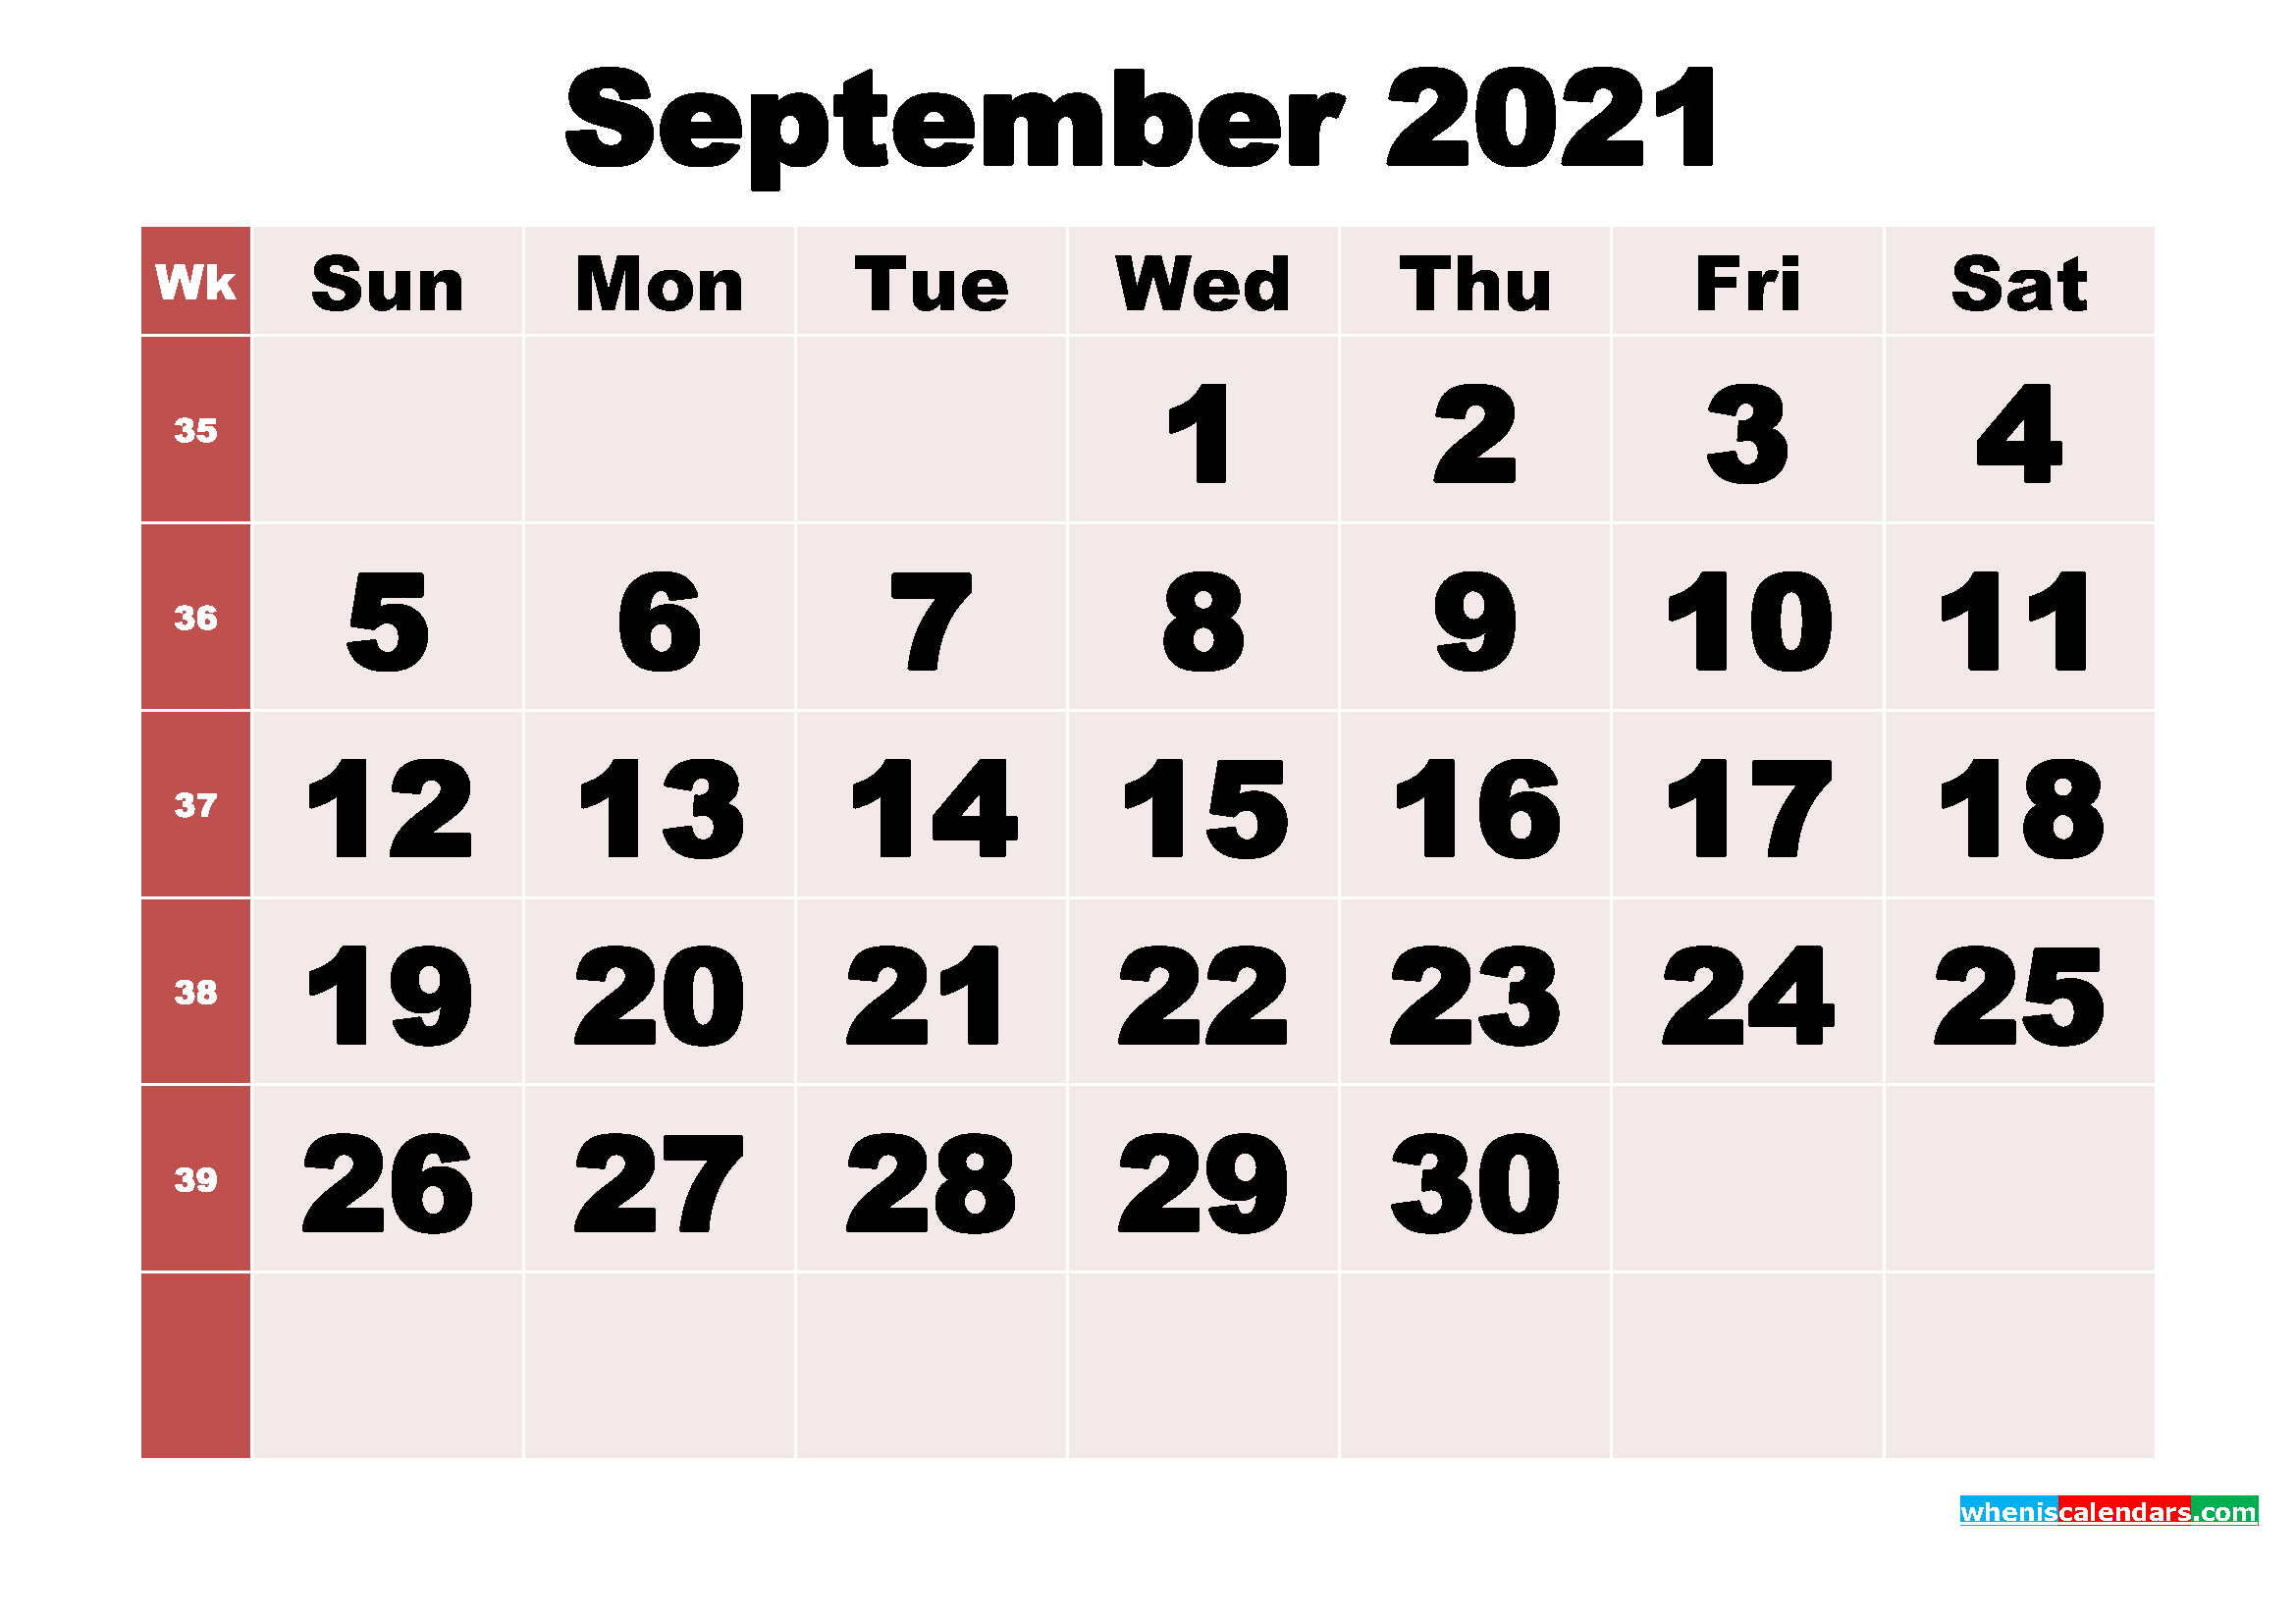 Free Printable Monthly Calendar September 2021